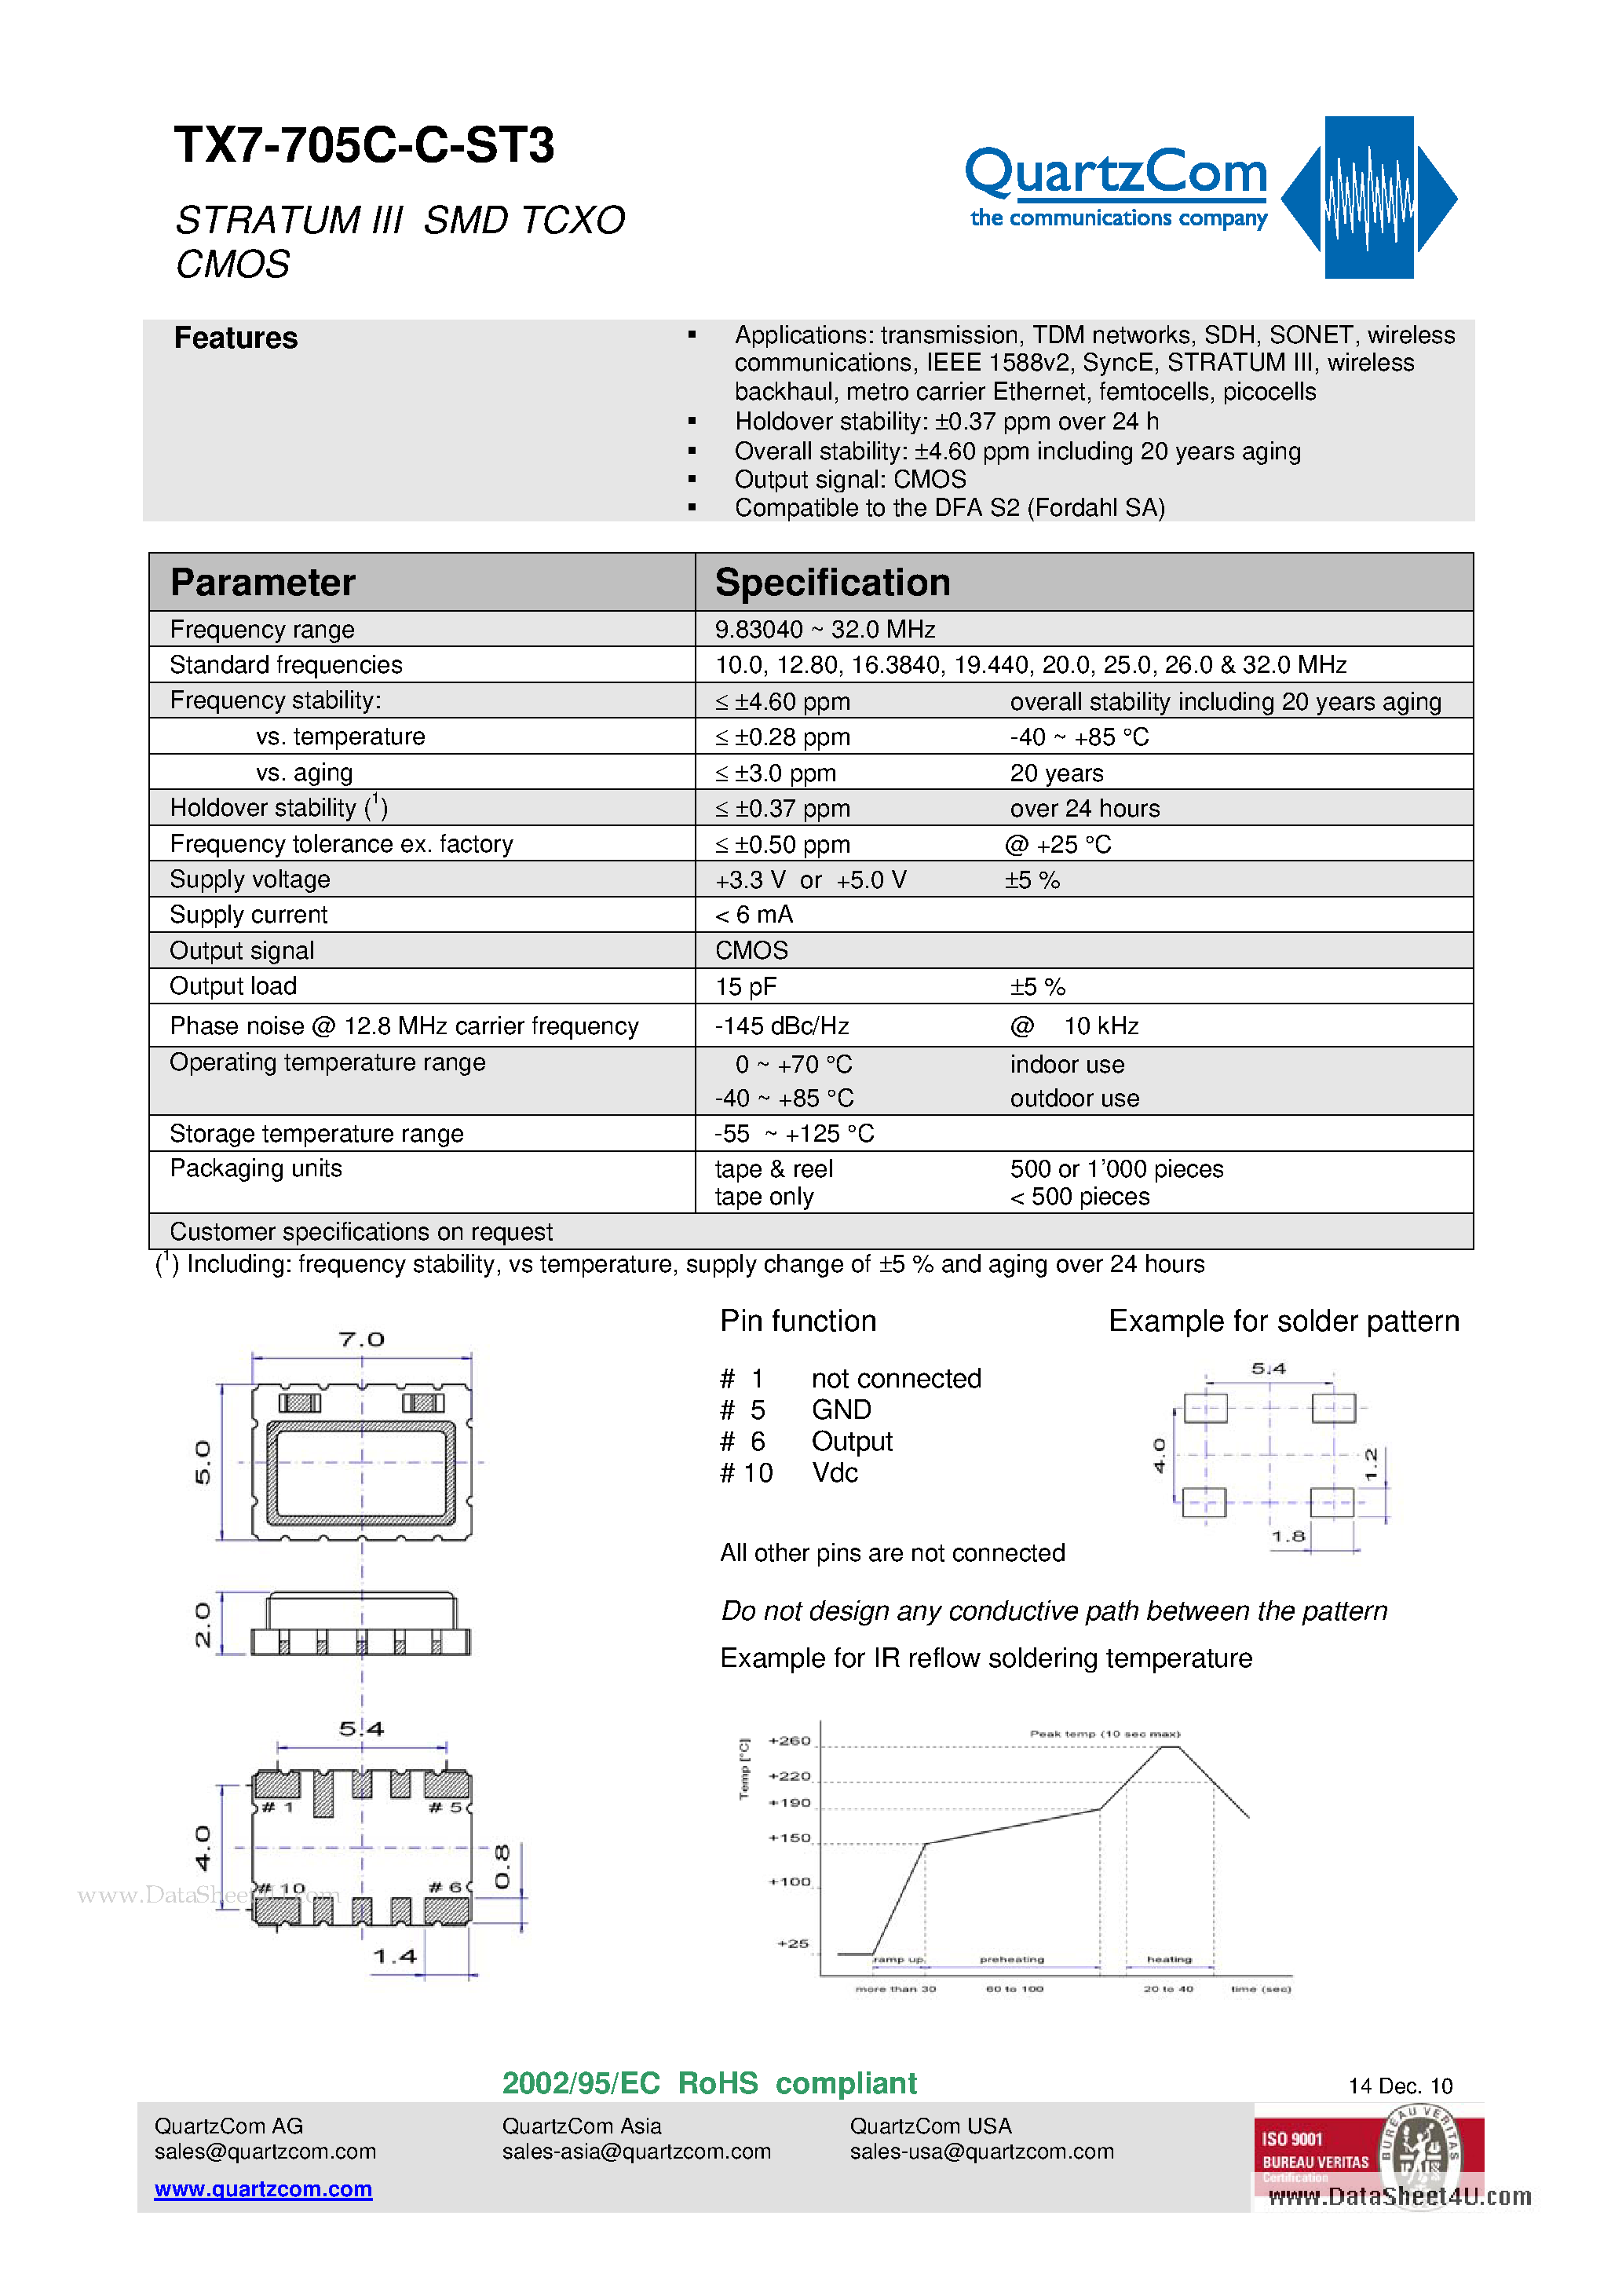 Datasheet TX7-705C-C-ST3 - STRATUM III SMD TCXO CMOS page 1